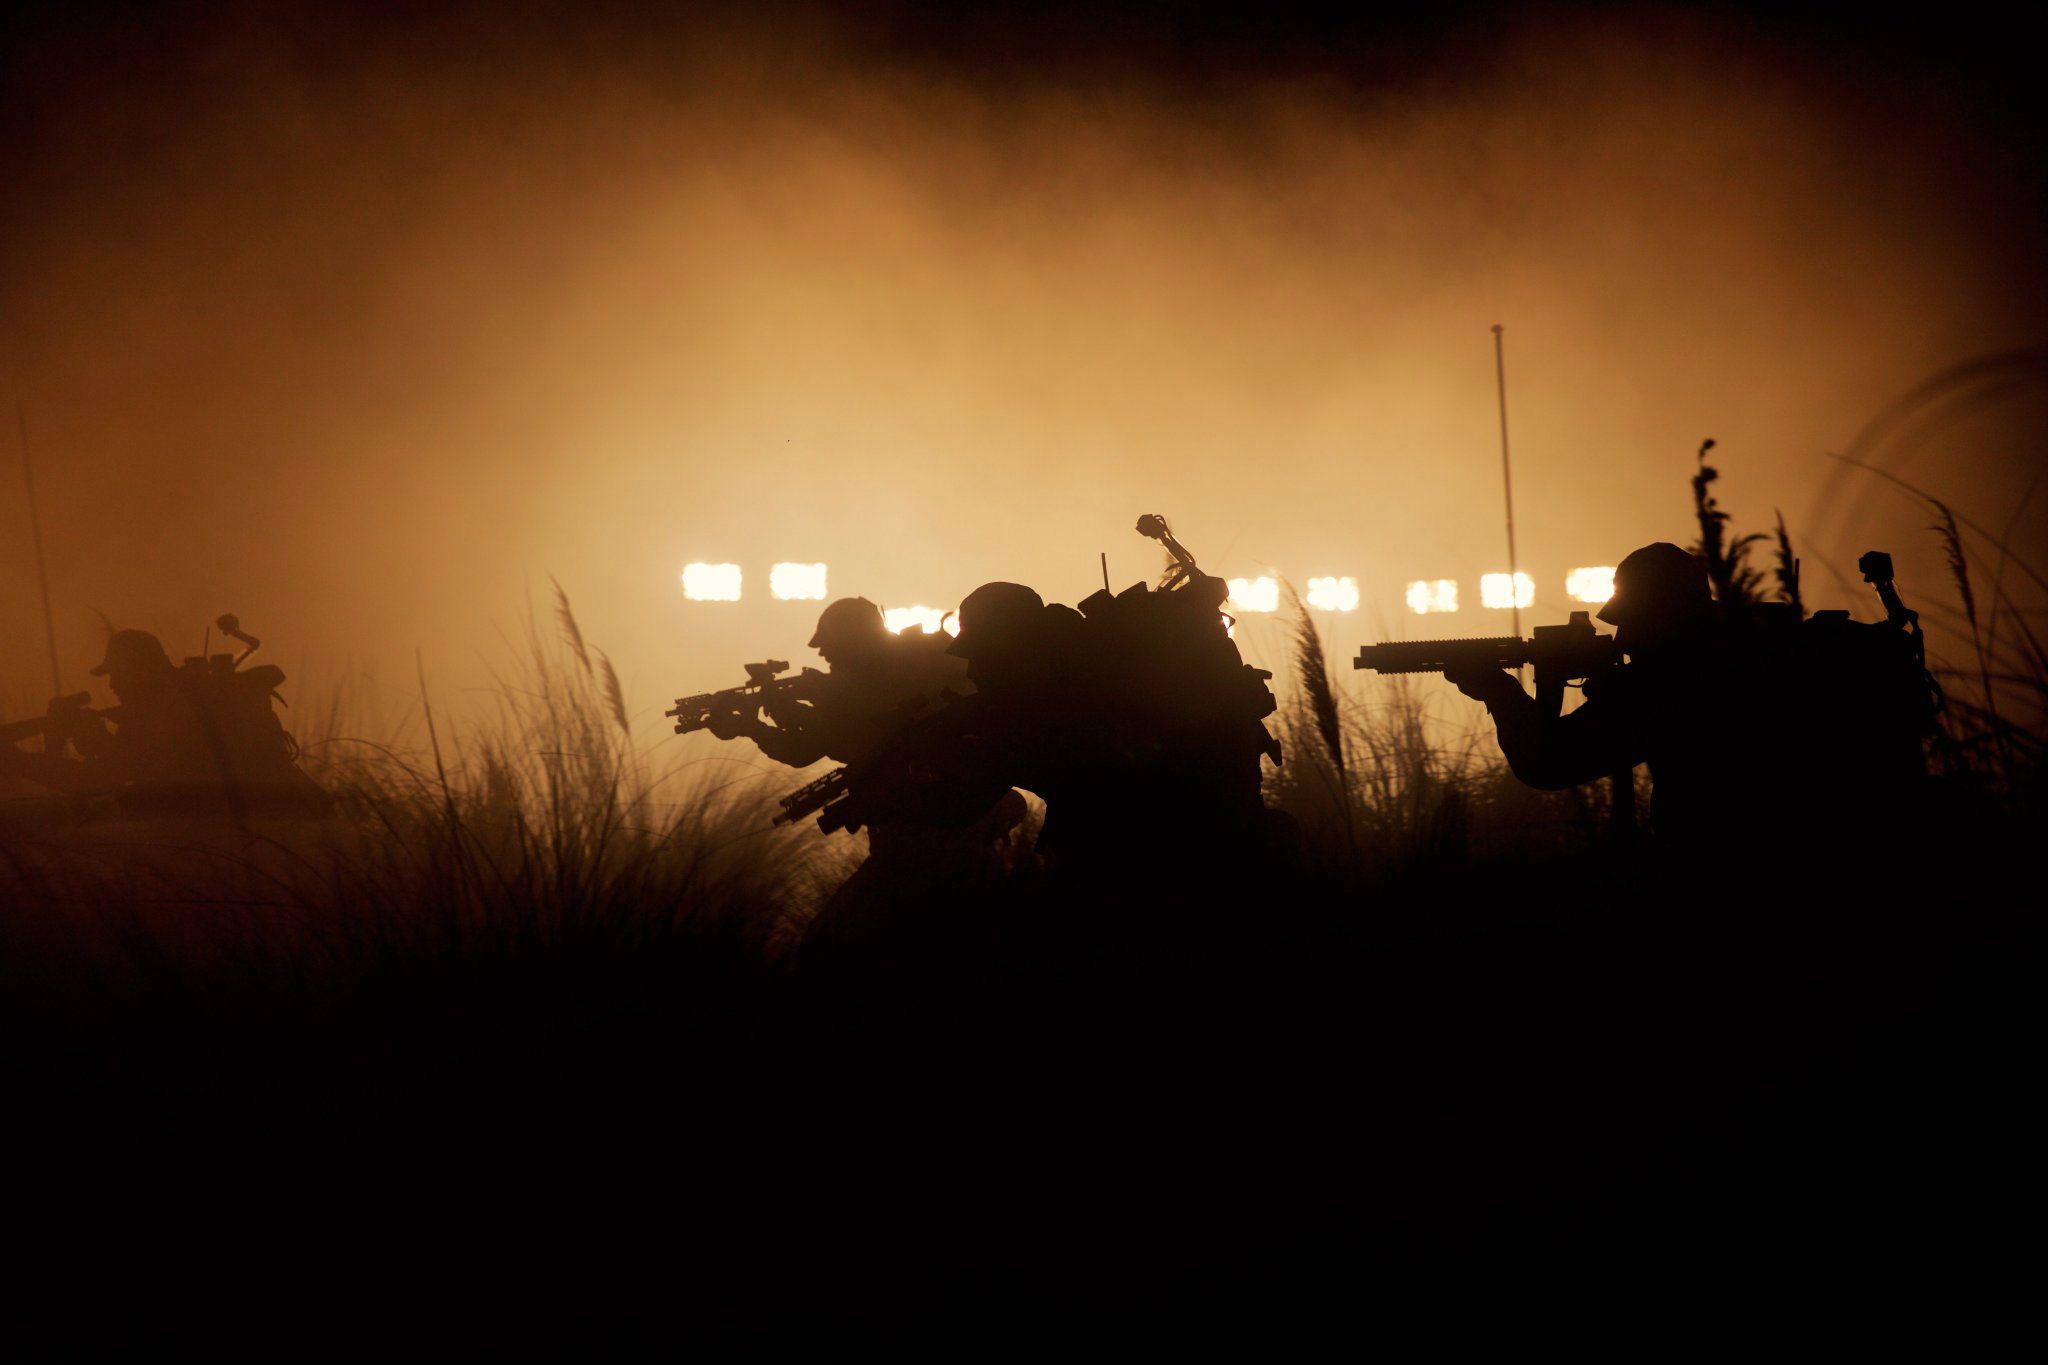 Alien: Covenant movie image - soldiers